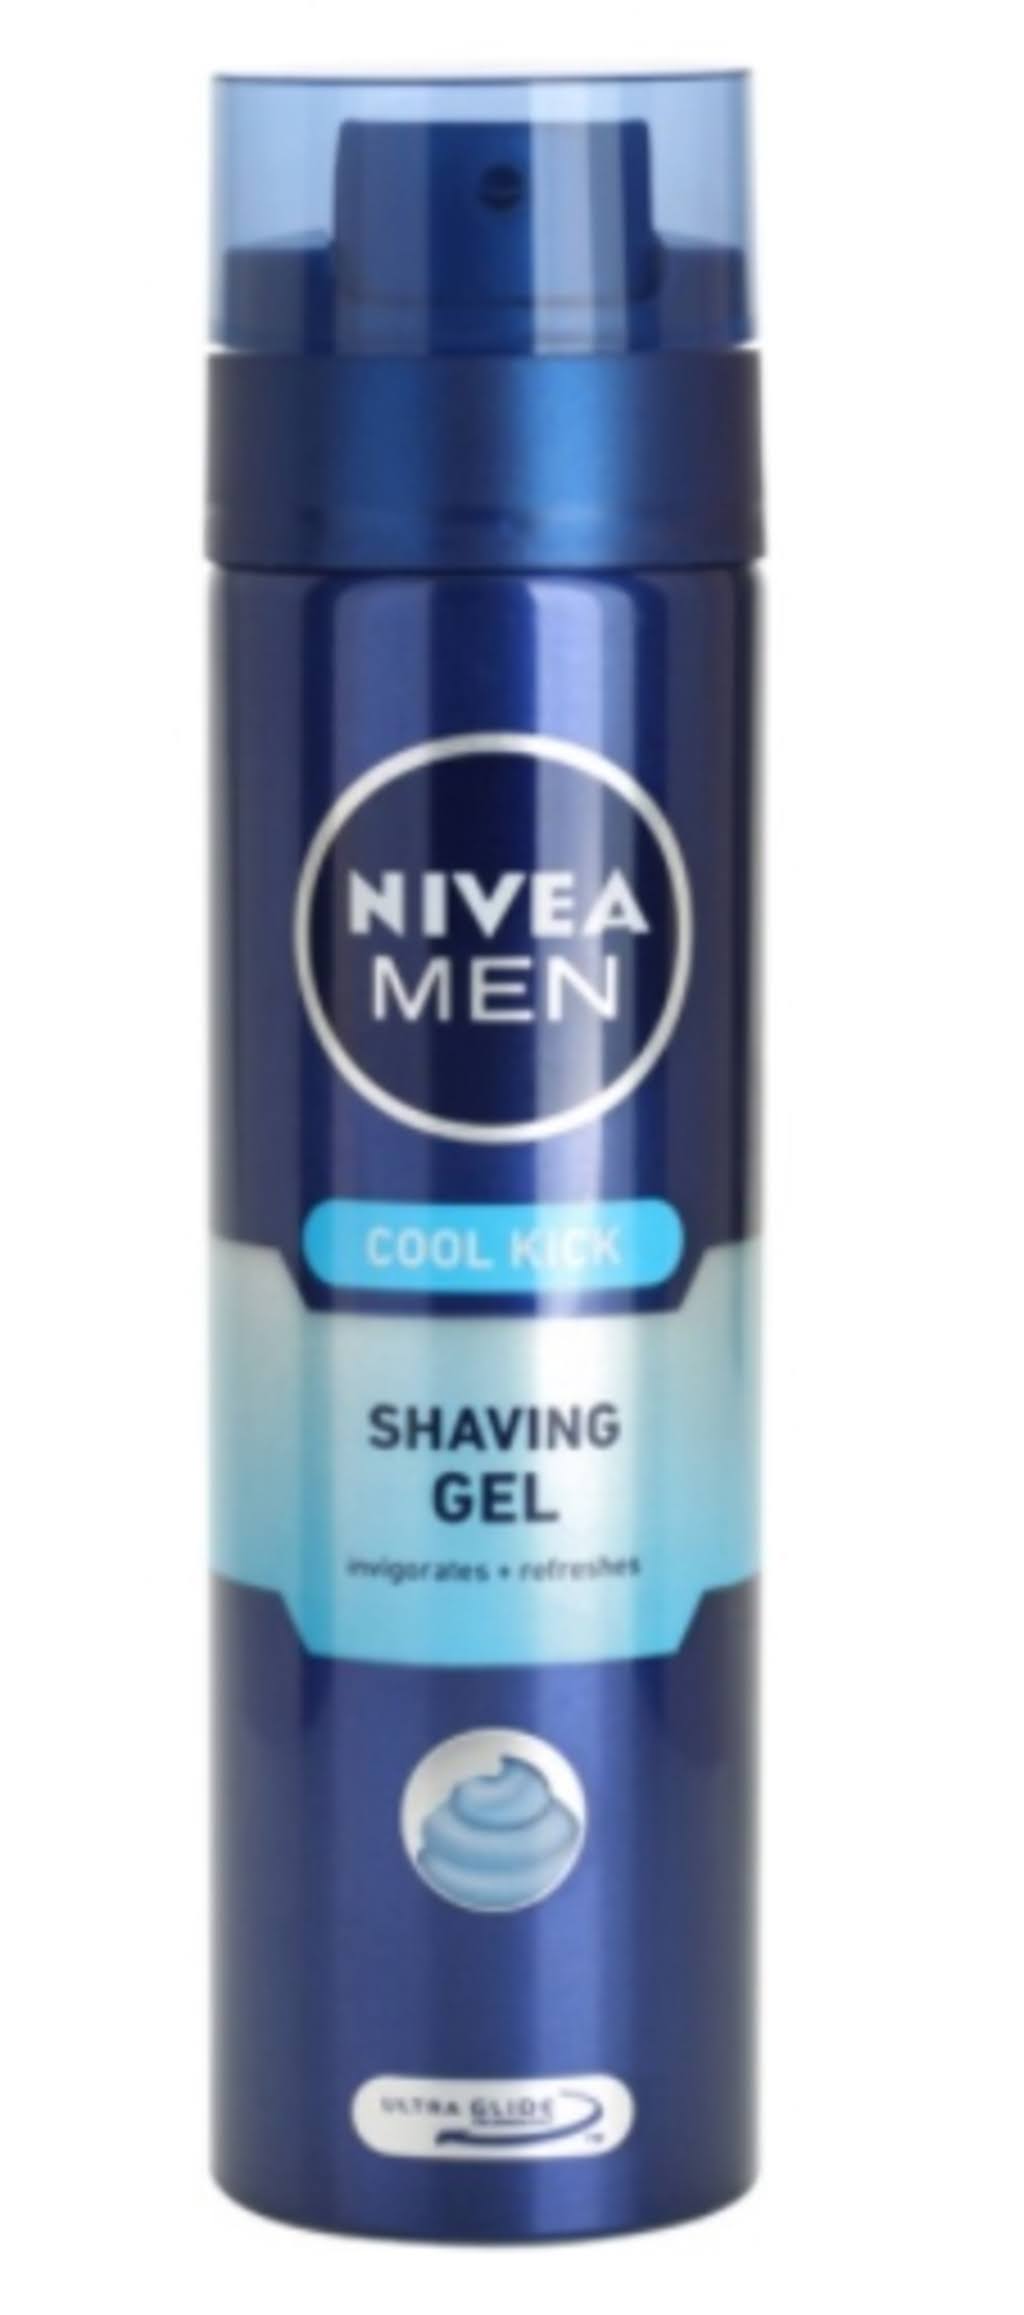 Nivea Men Cool Kick Shaving Gel - 200ml